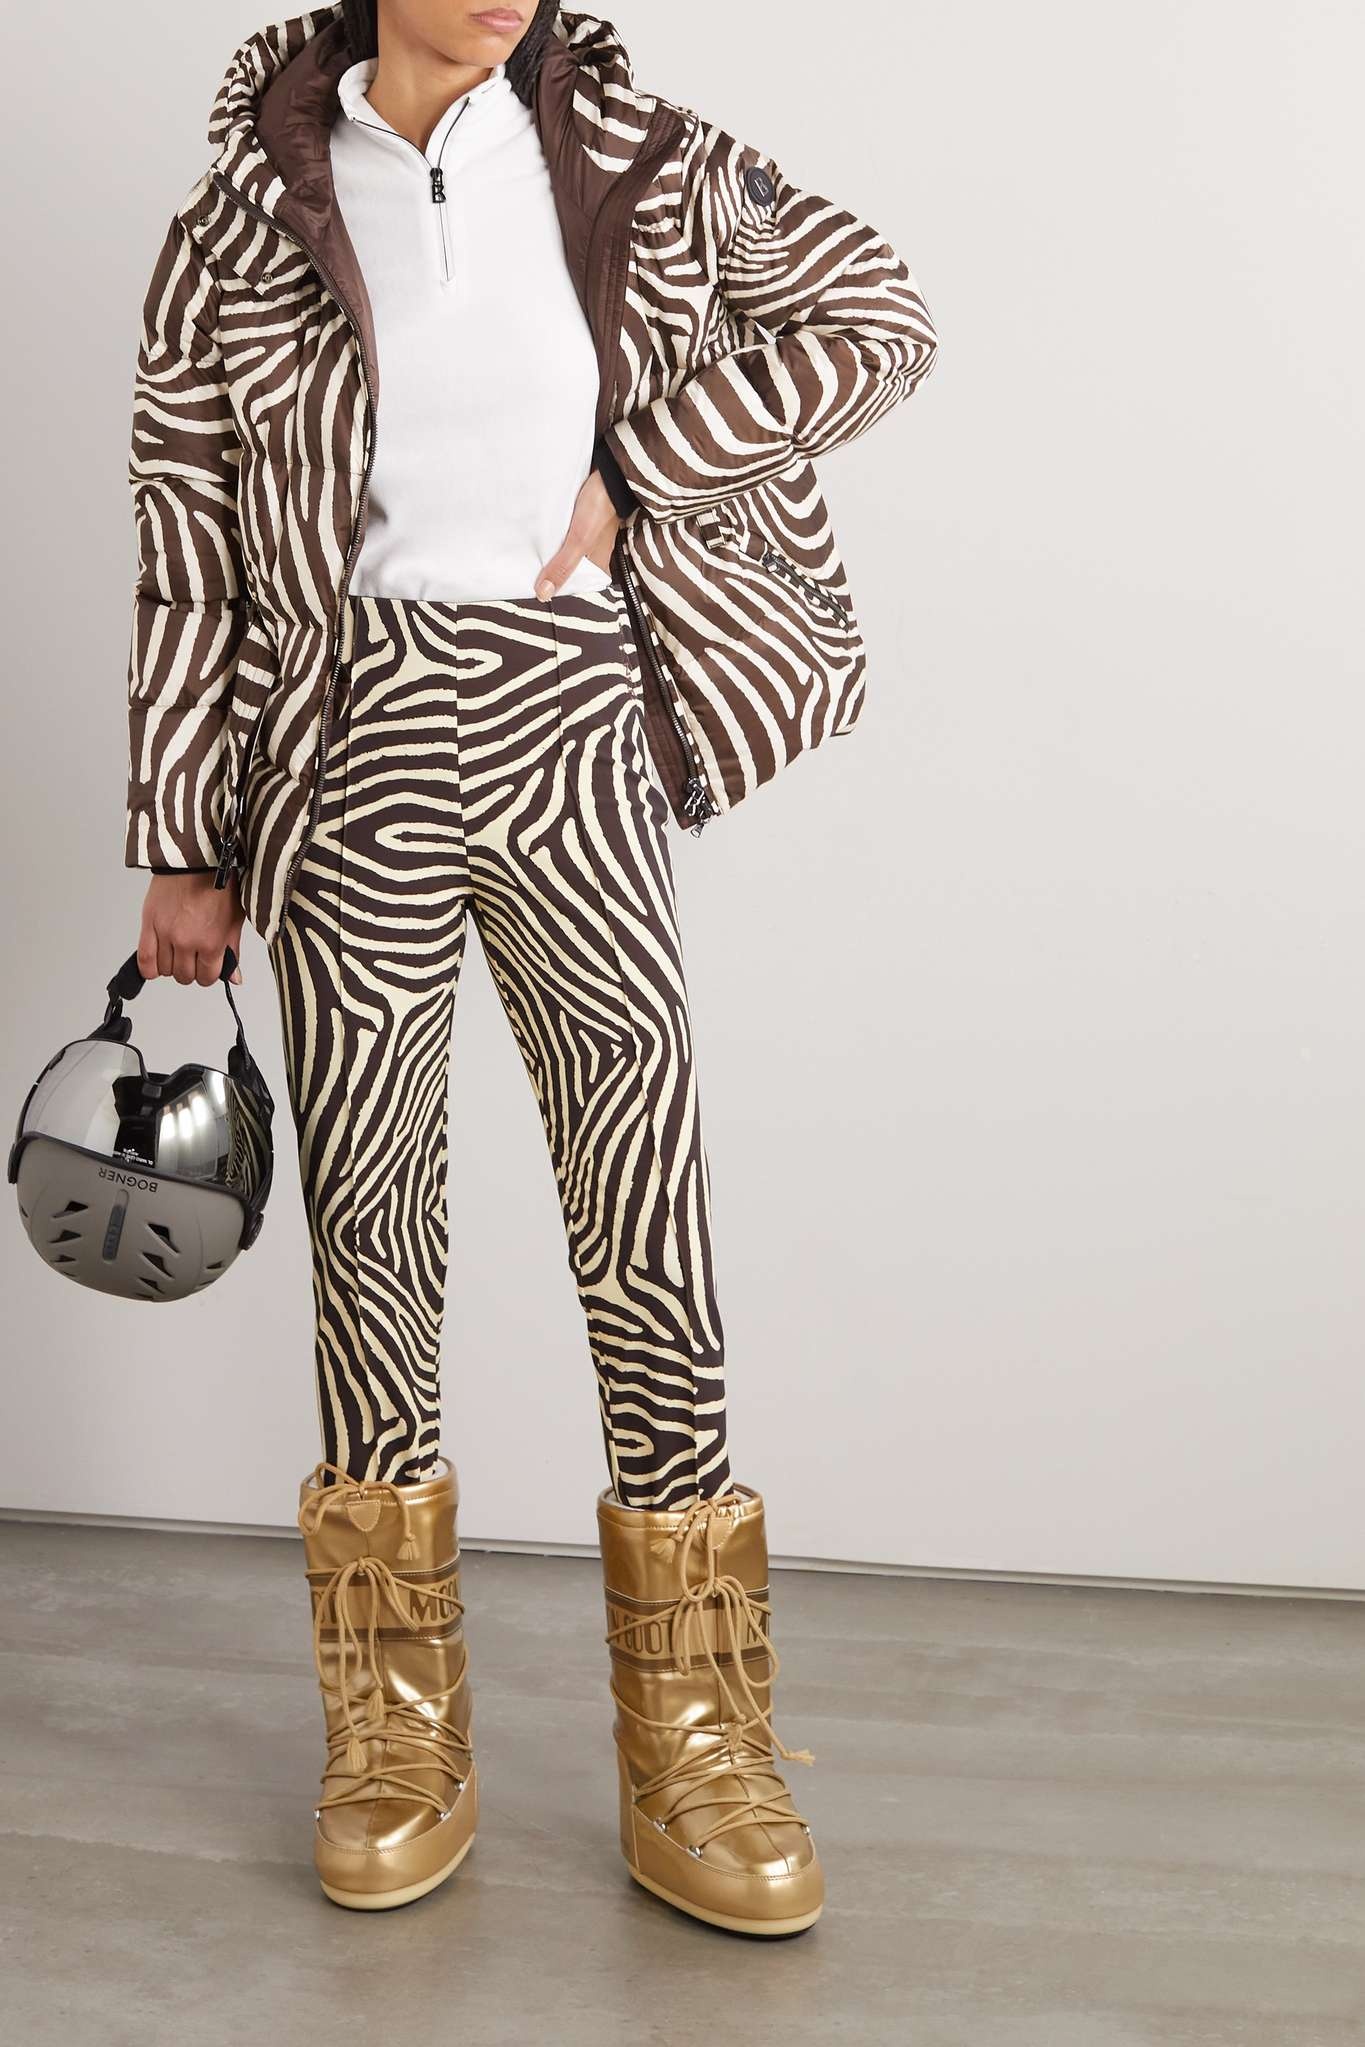 Zebra-print ski pants